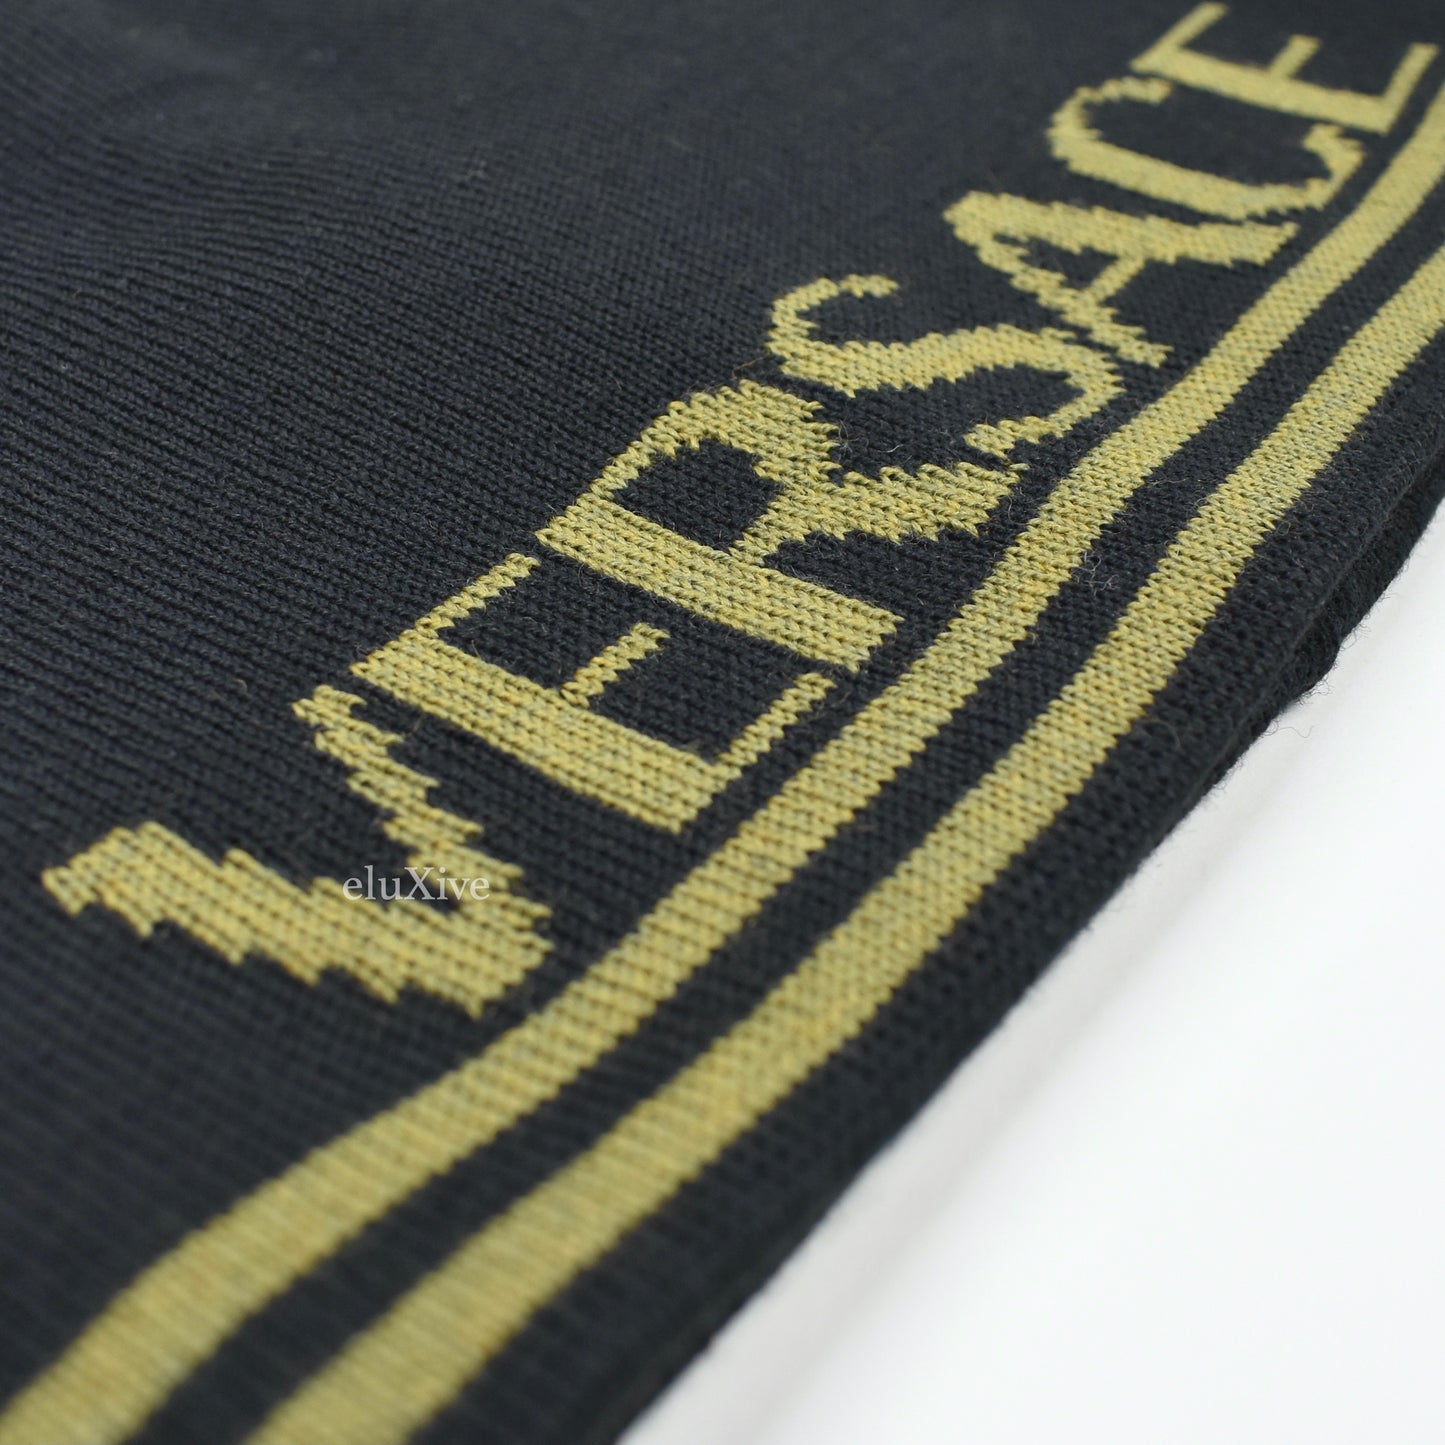 Versace - Black & Olive Logo Knit Beanie